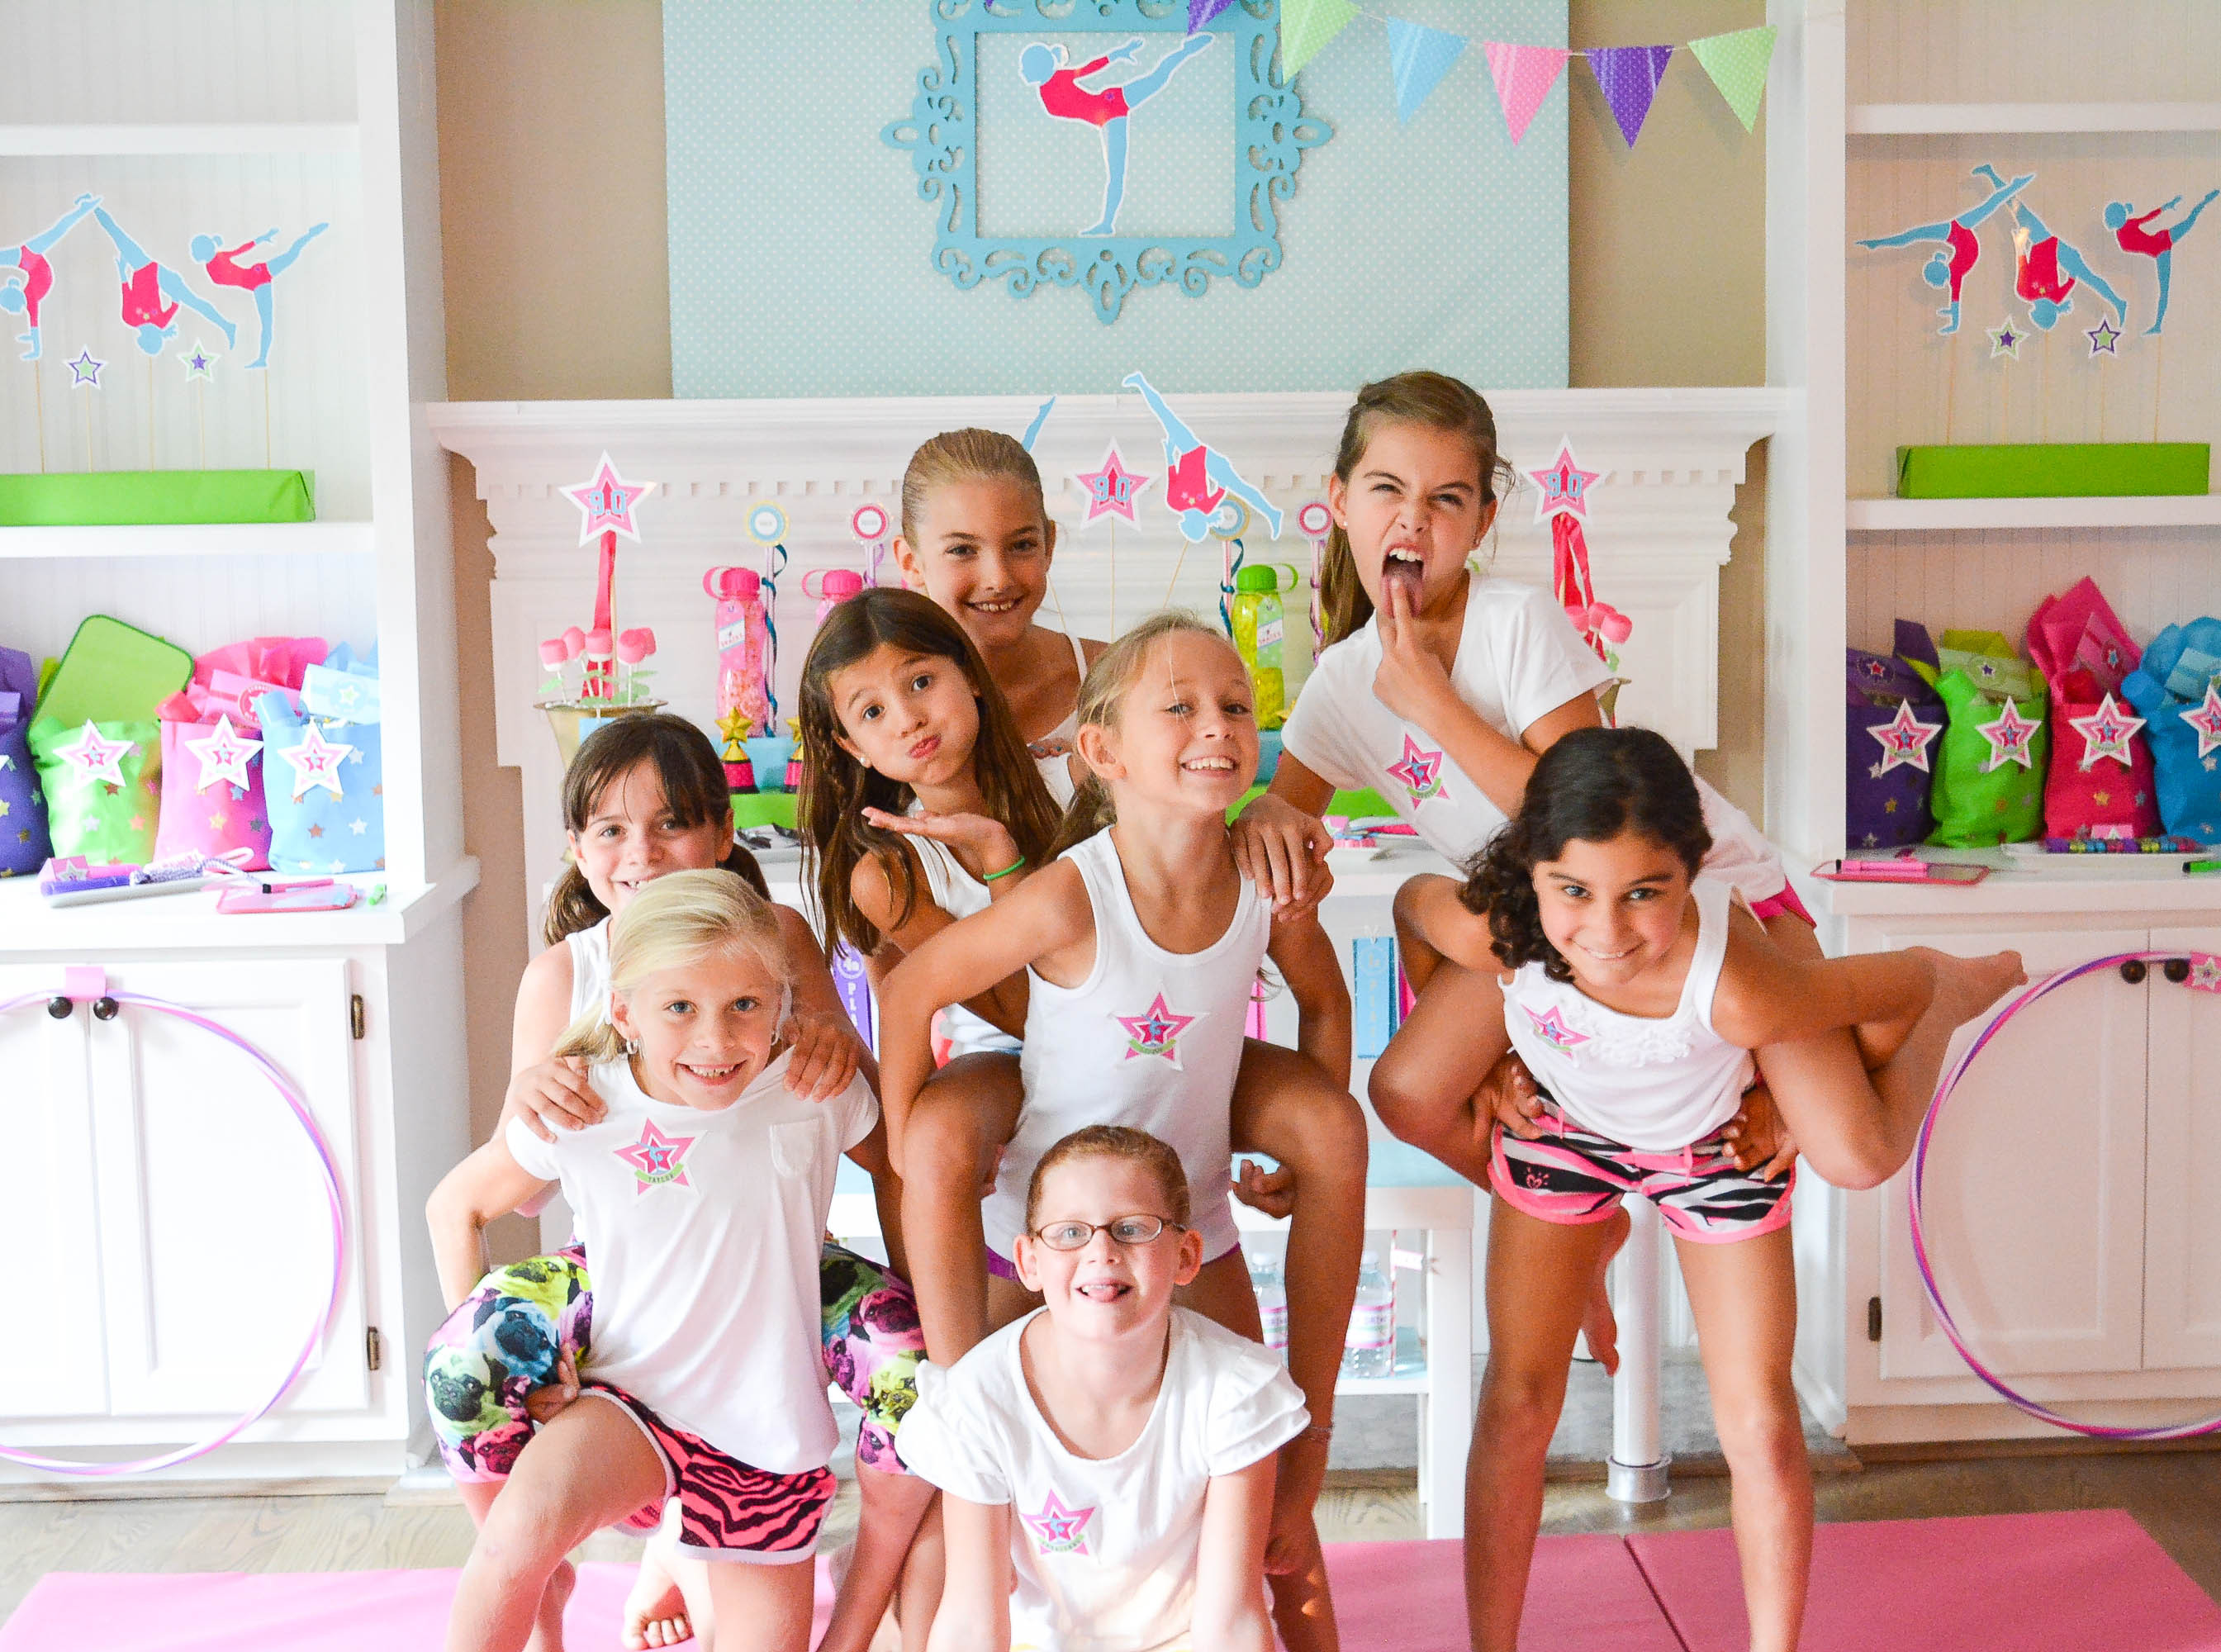 Best ideas about Gymnastics Birthday Party
. Save or Pin Gymnastics birthday Now.